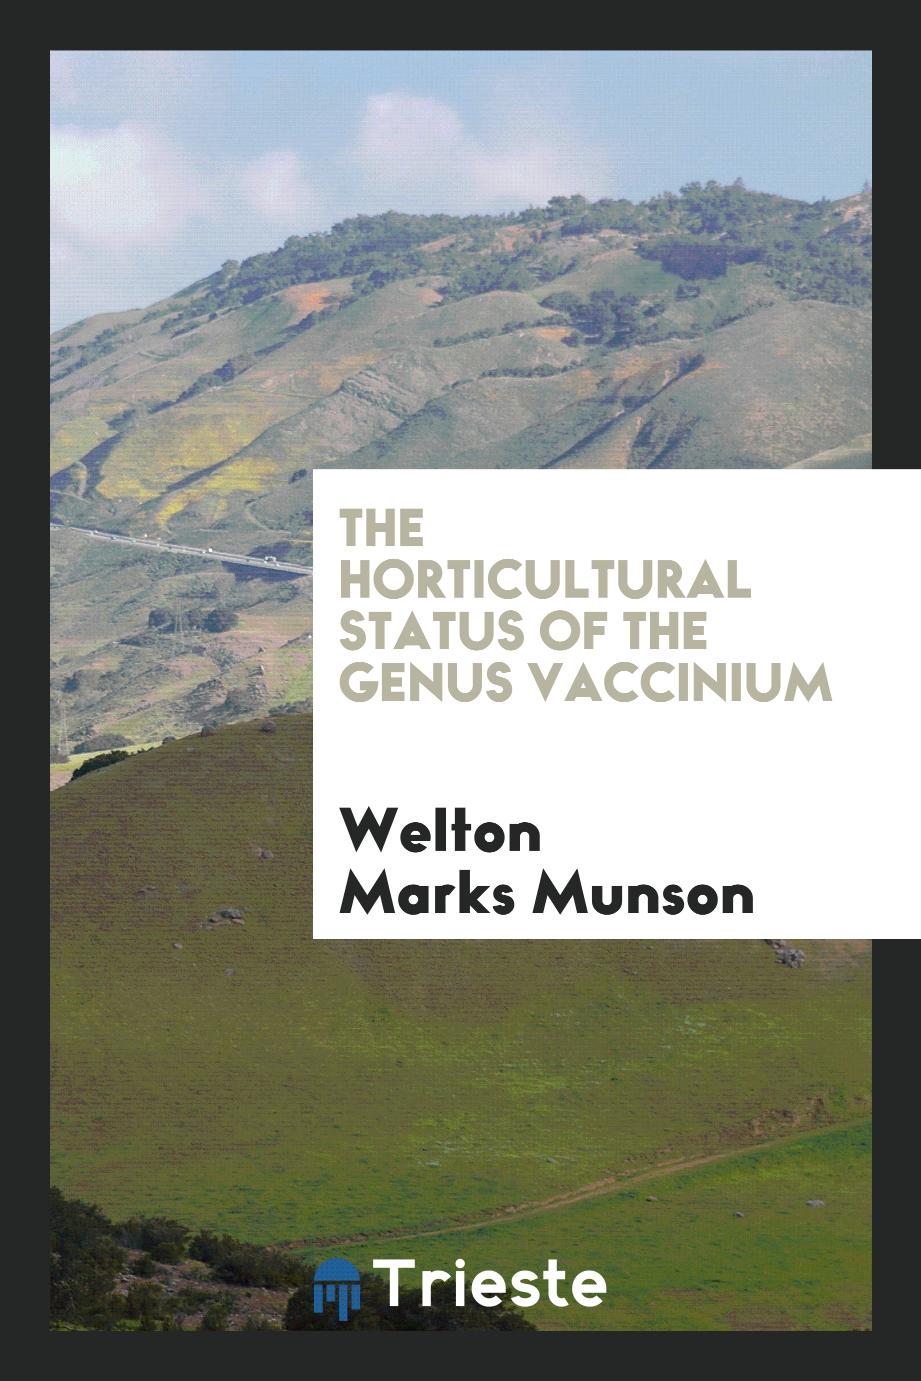 Welton Marks Munson - The Horticultural Status of the Genus Vaccinium